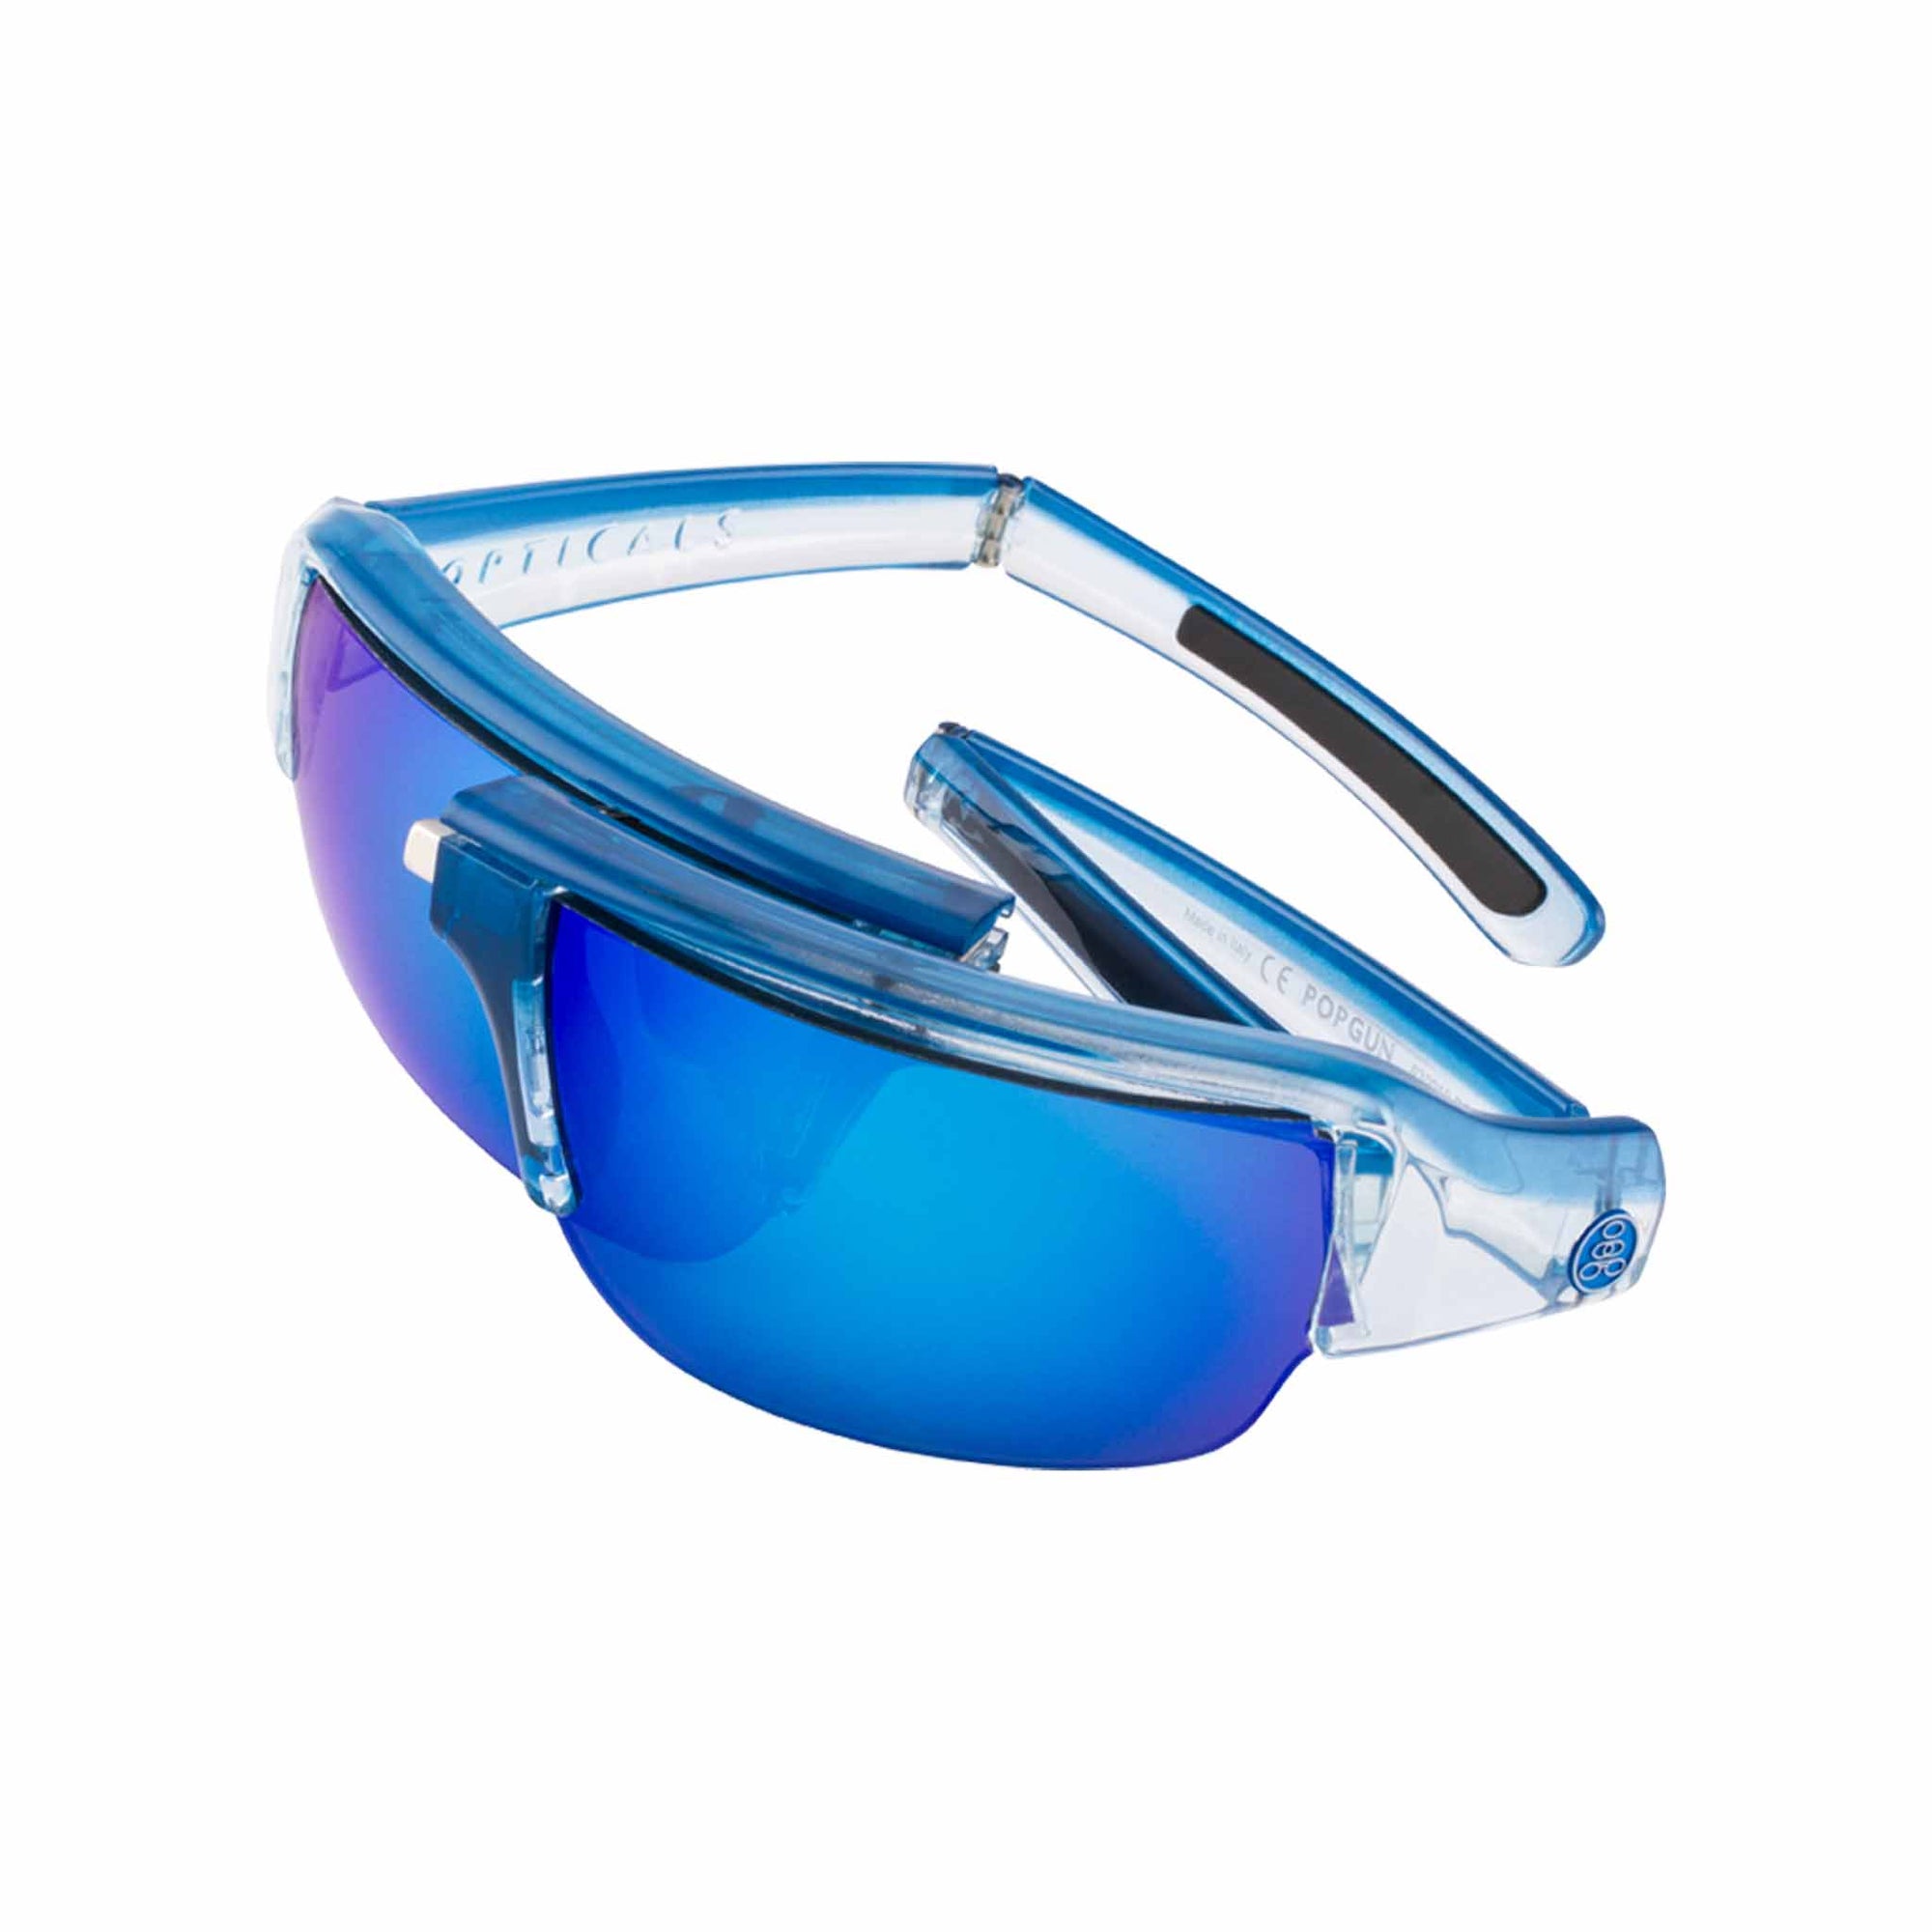 Popticals, Premium Compact Sunglasses, PopGun, 030010-BFUN, Polarized Sunglasses, Gloss Blue/Clear Crystal Frame, Gray Lenses w/Blue Mirror Finish, Glam View